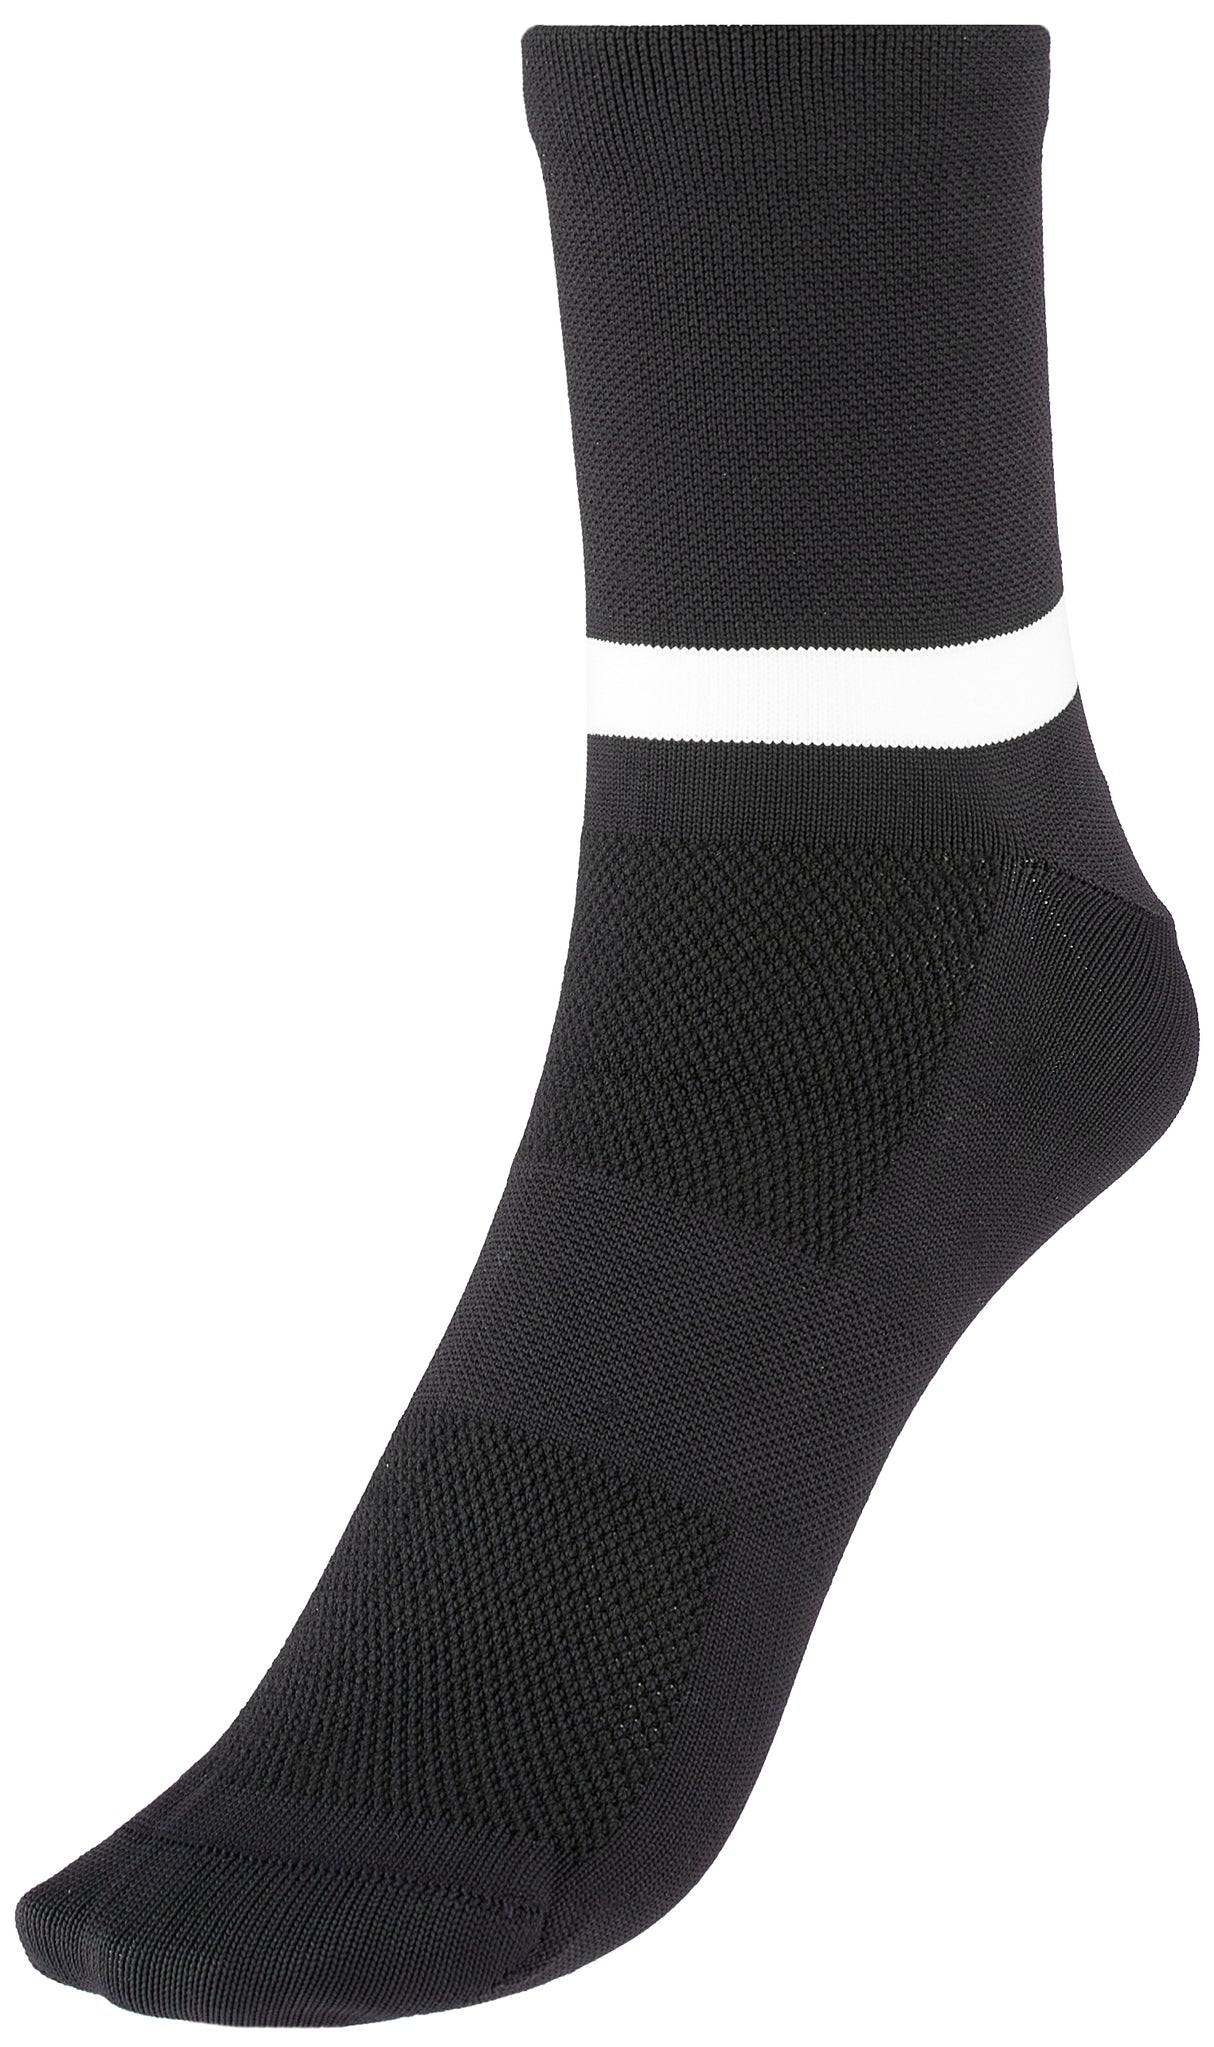 CUBE Socke Mid Cut Blackline black